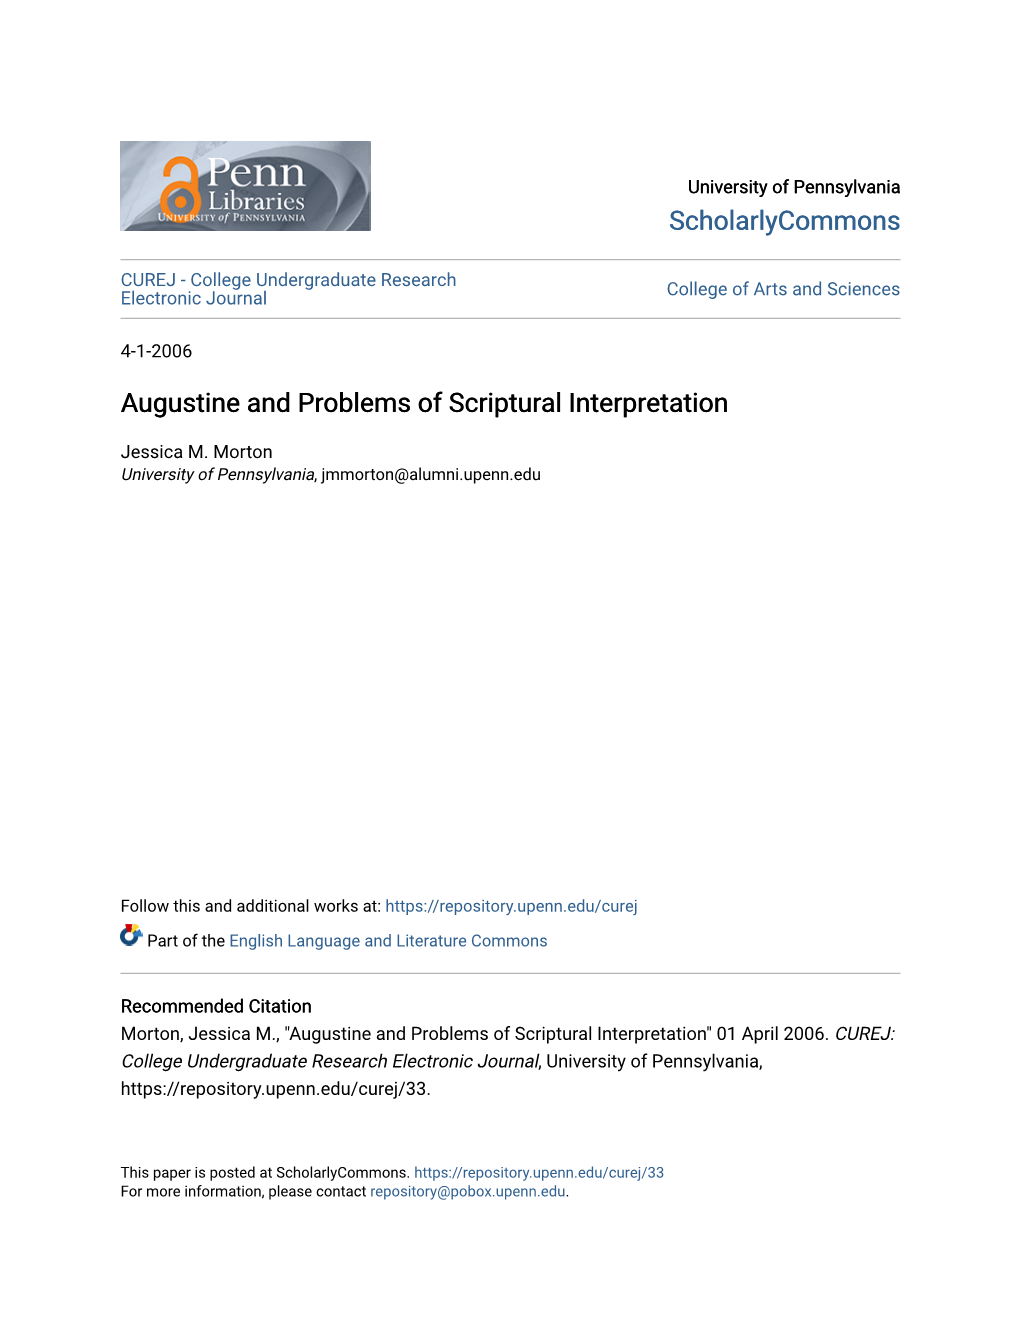 Augustine and Problems of Scriptural Interpretation